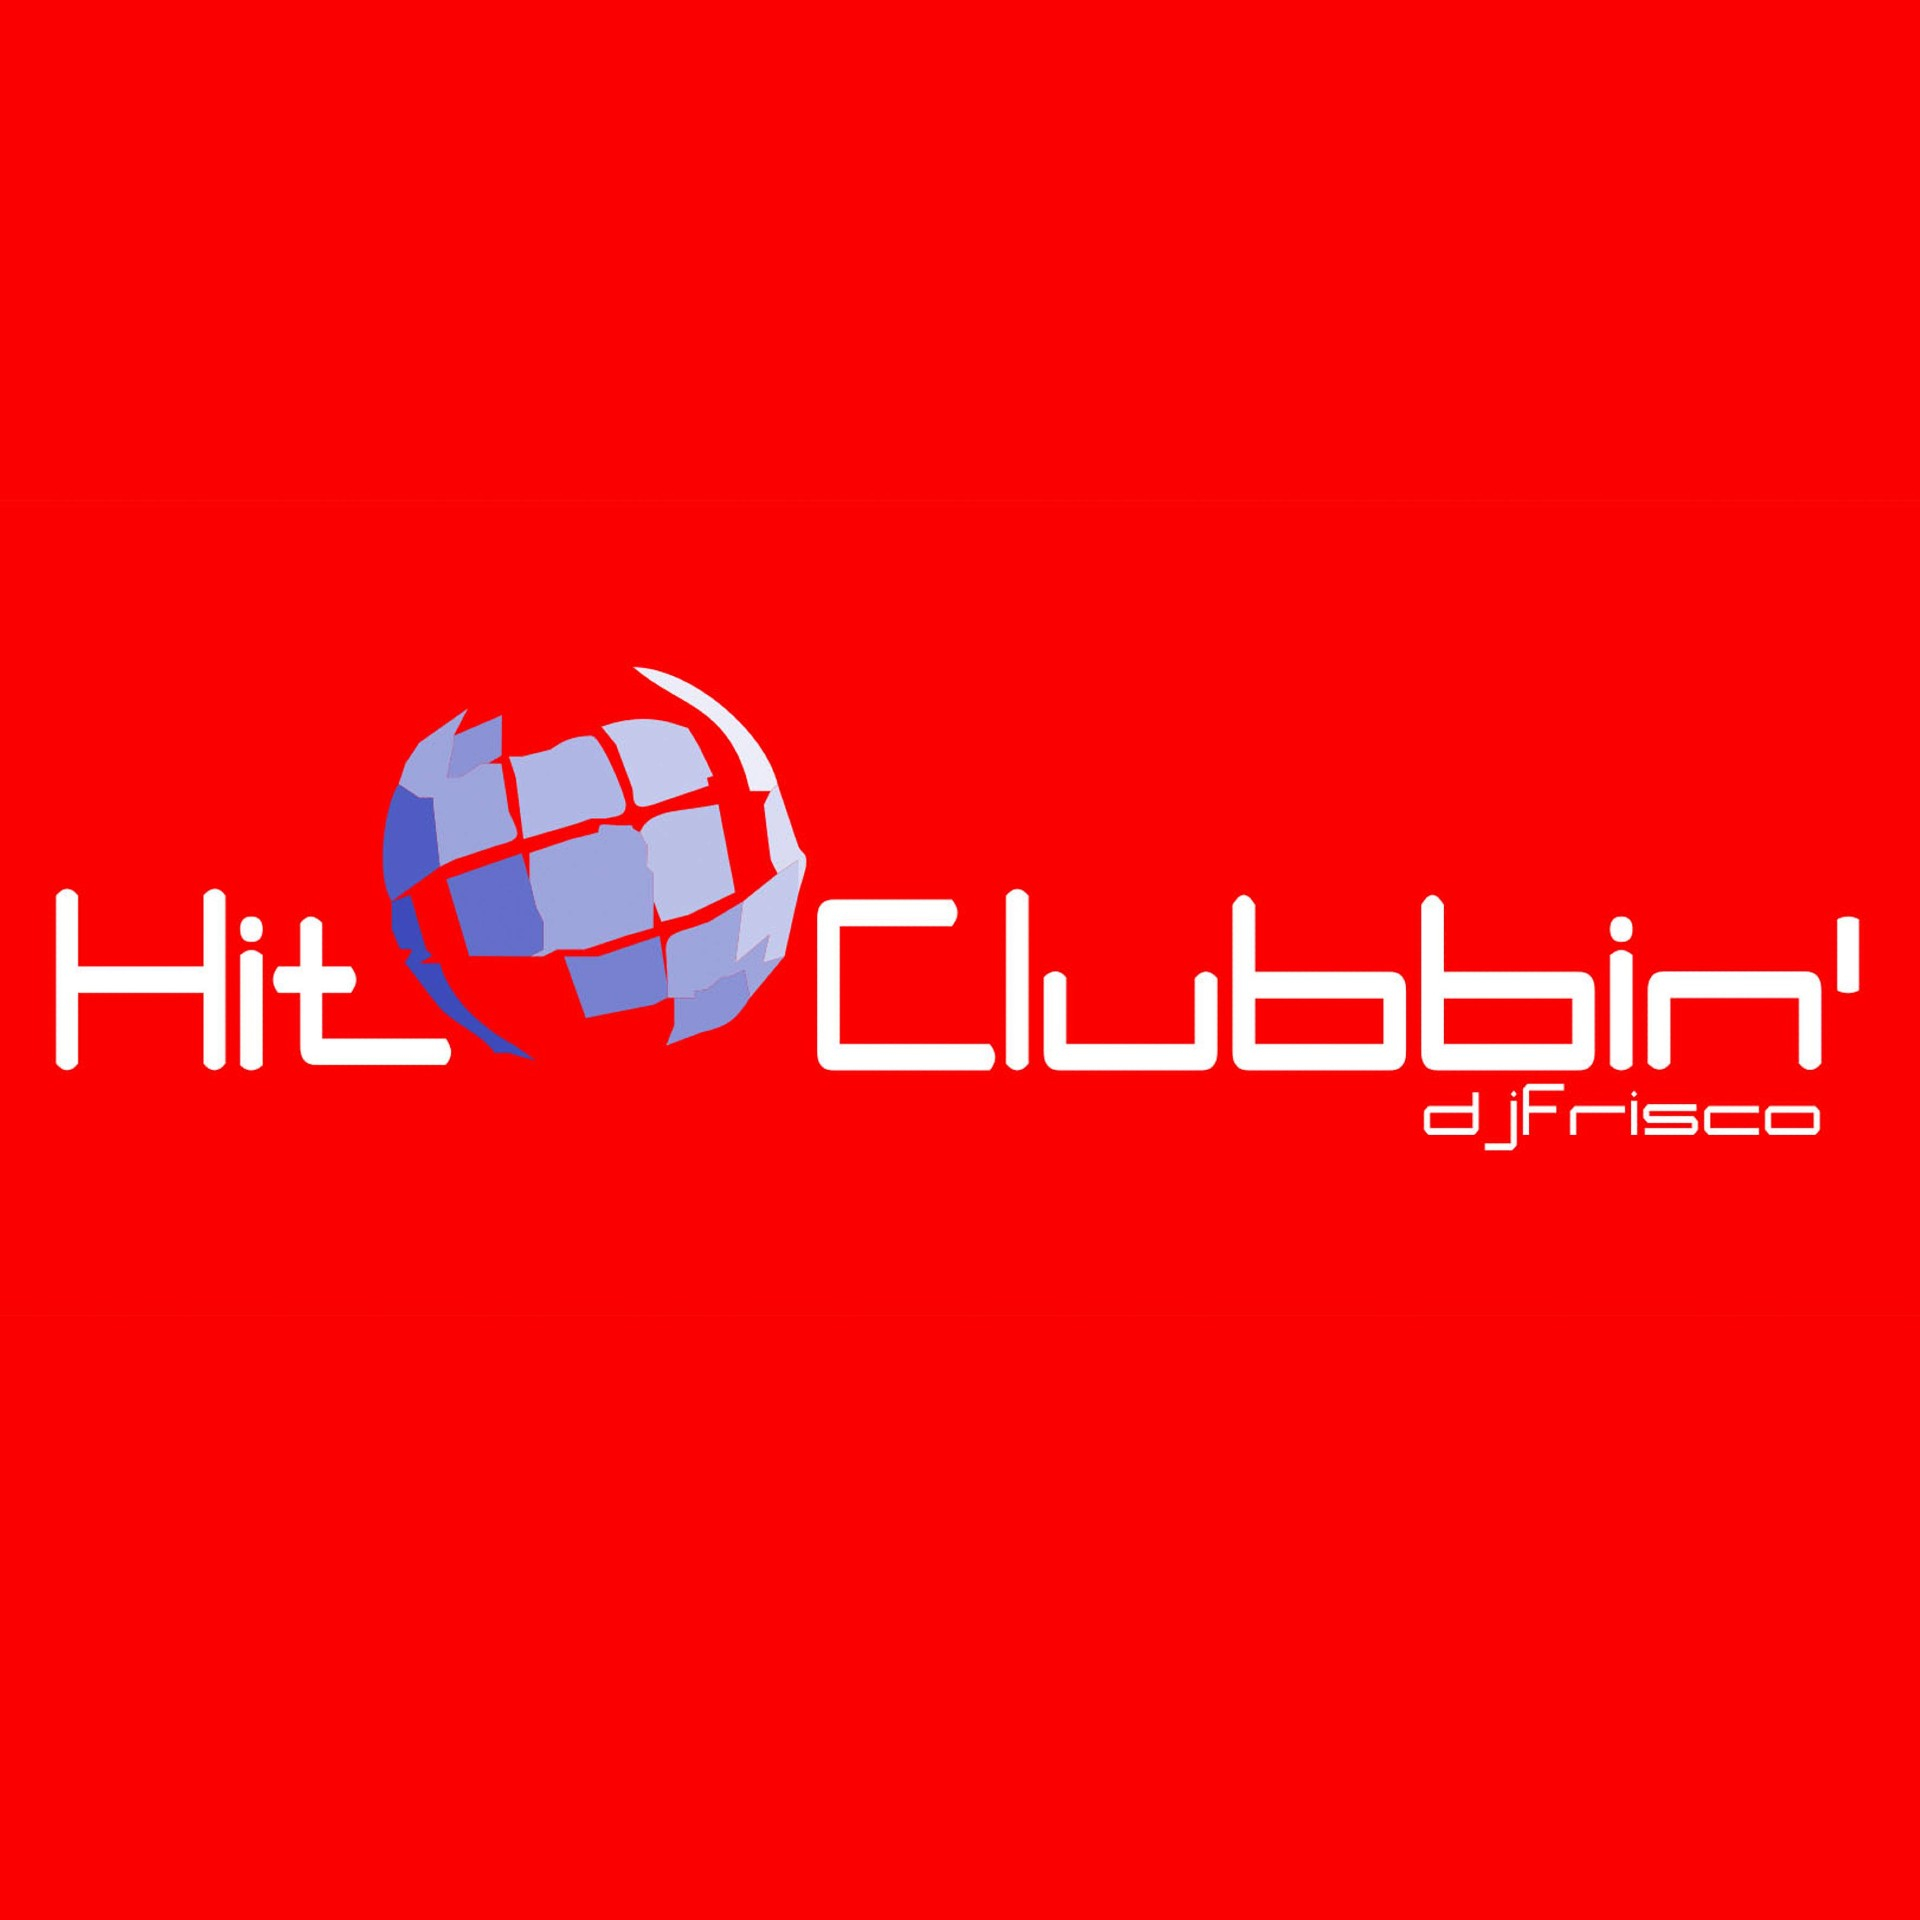 DJ Frisco | Hit Clubbin